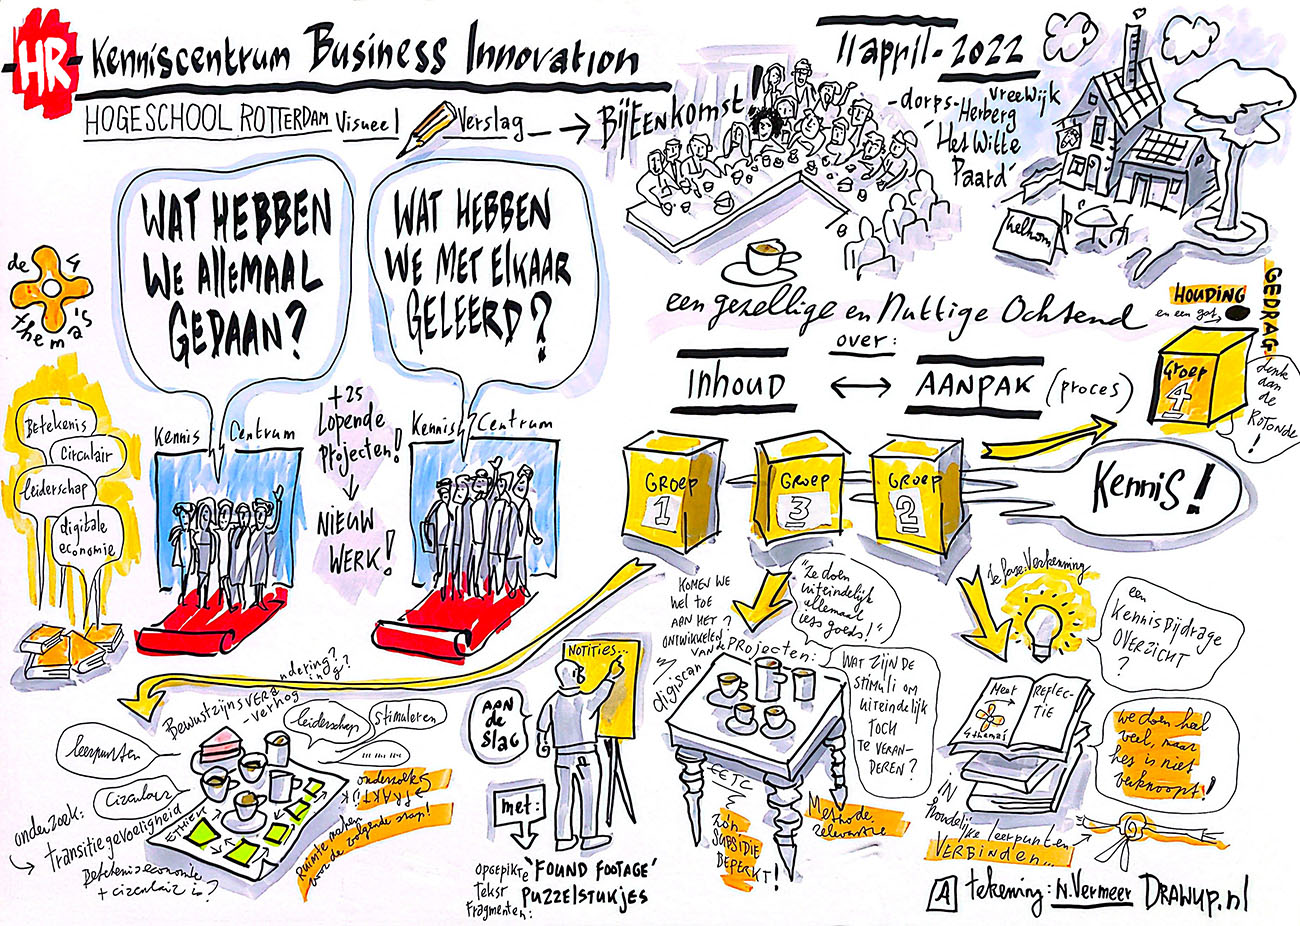 Hogeschool Rotterdam Kenniscentrum Business Innovation Getekend Verslag 01